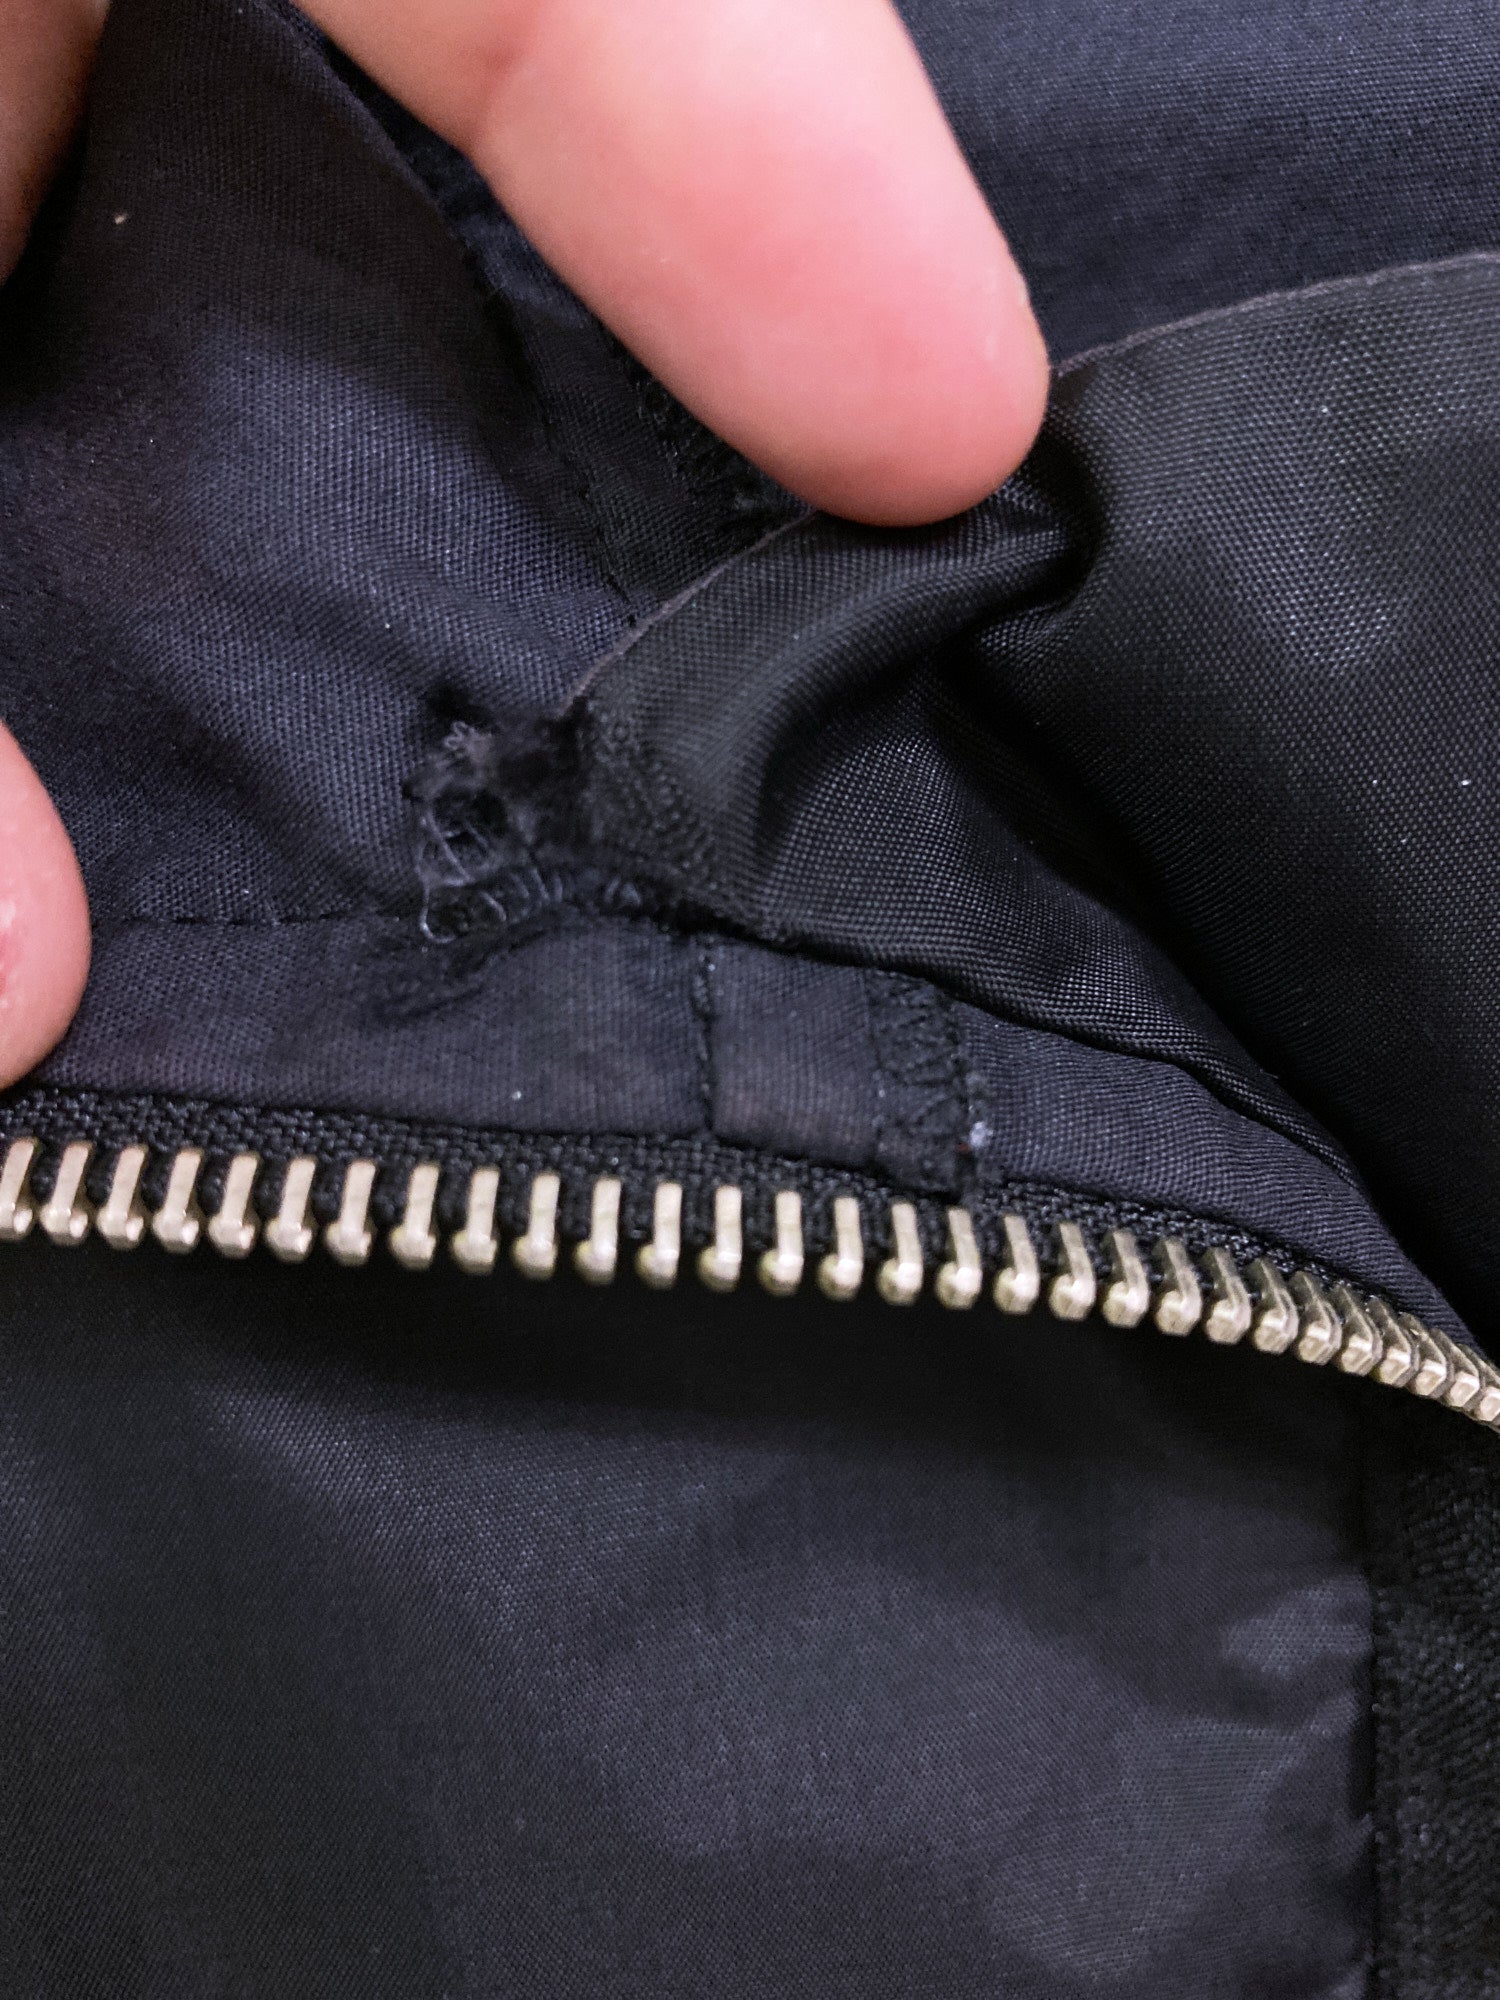 Jean Colonna padded black nylon hooded pullover windbreaker - size 48